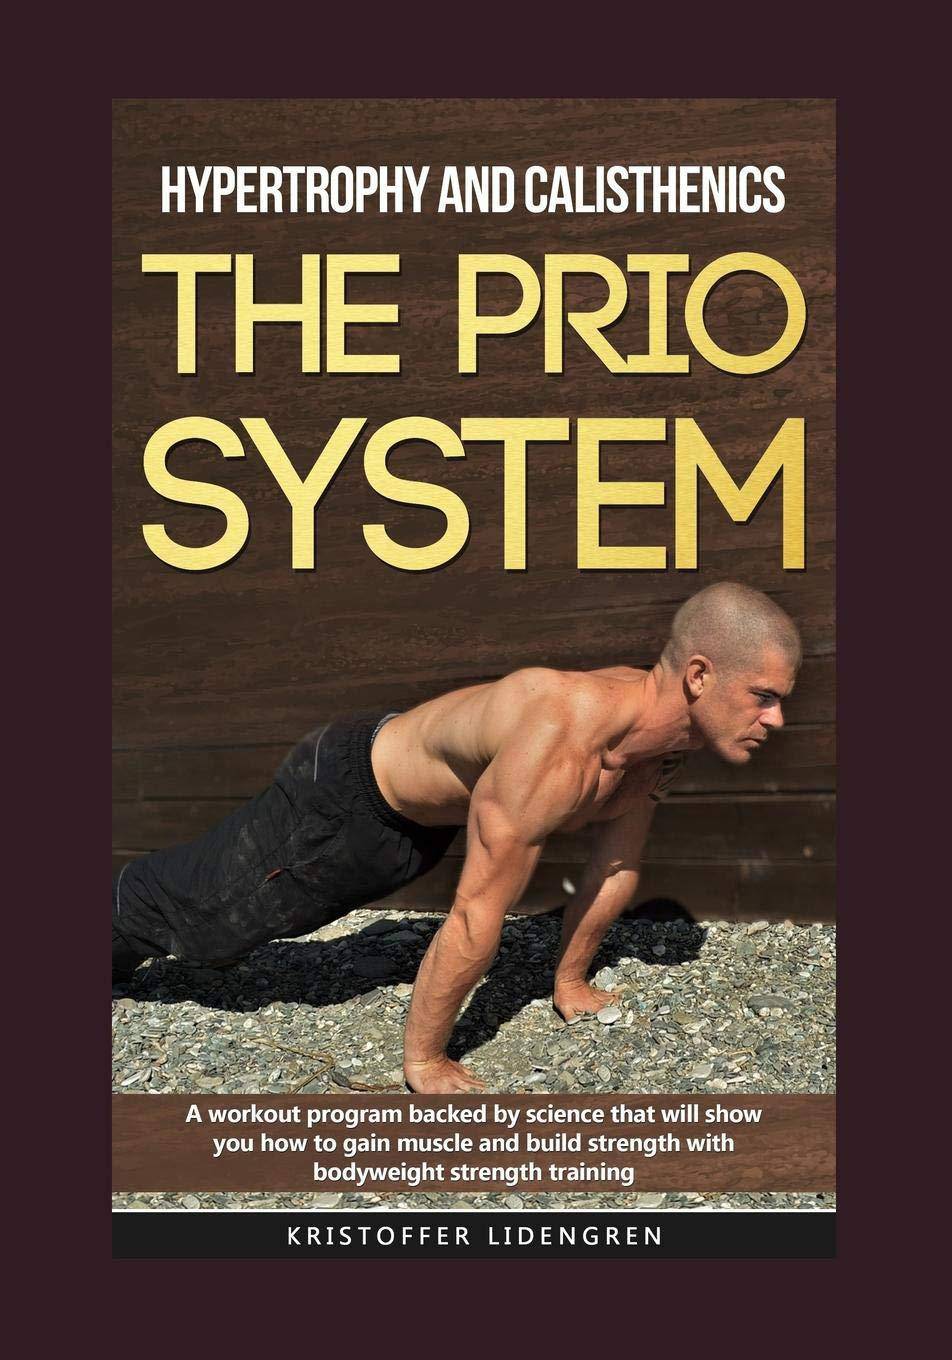 Hypertrophy and calisthenics THE PRIO SYSTEM - SureShot Books Publishing LLC